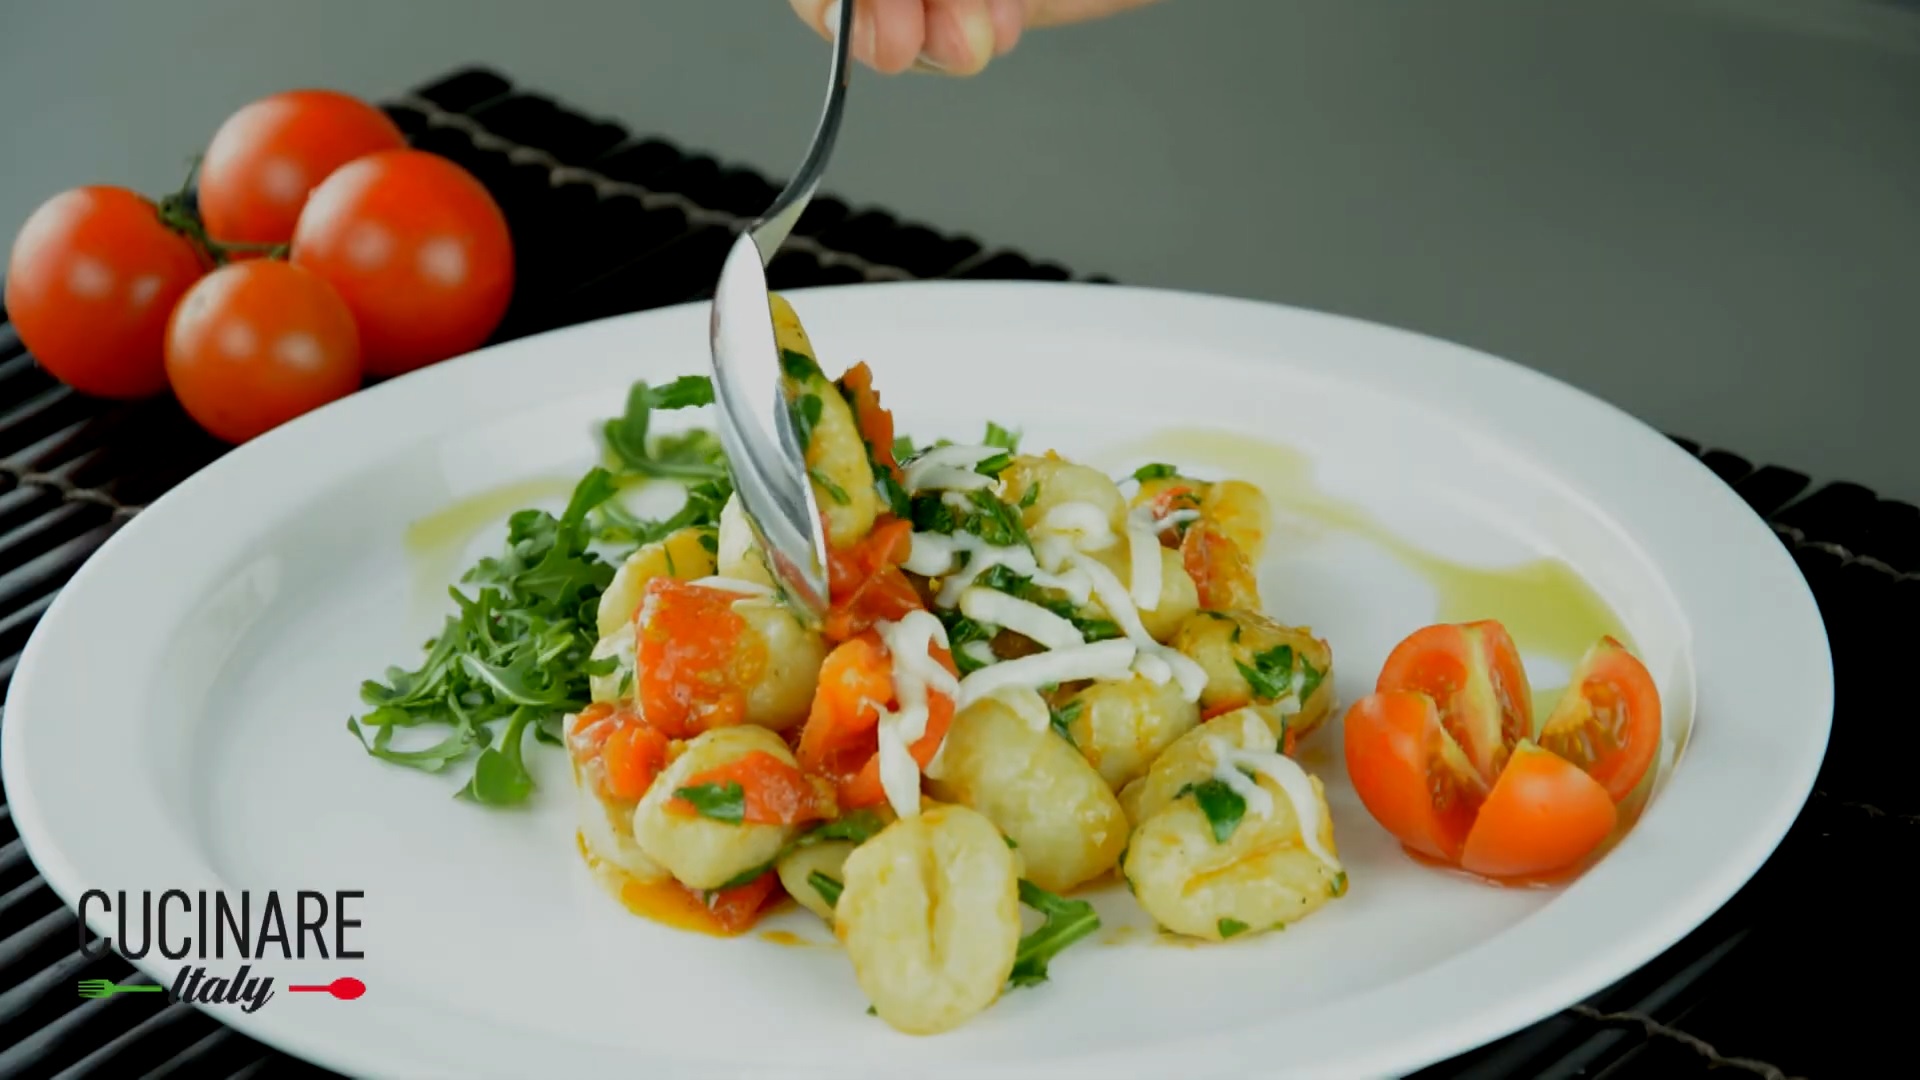 Patato Gnocchi with cherry tomatoes and arugula